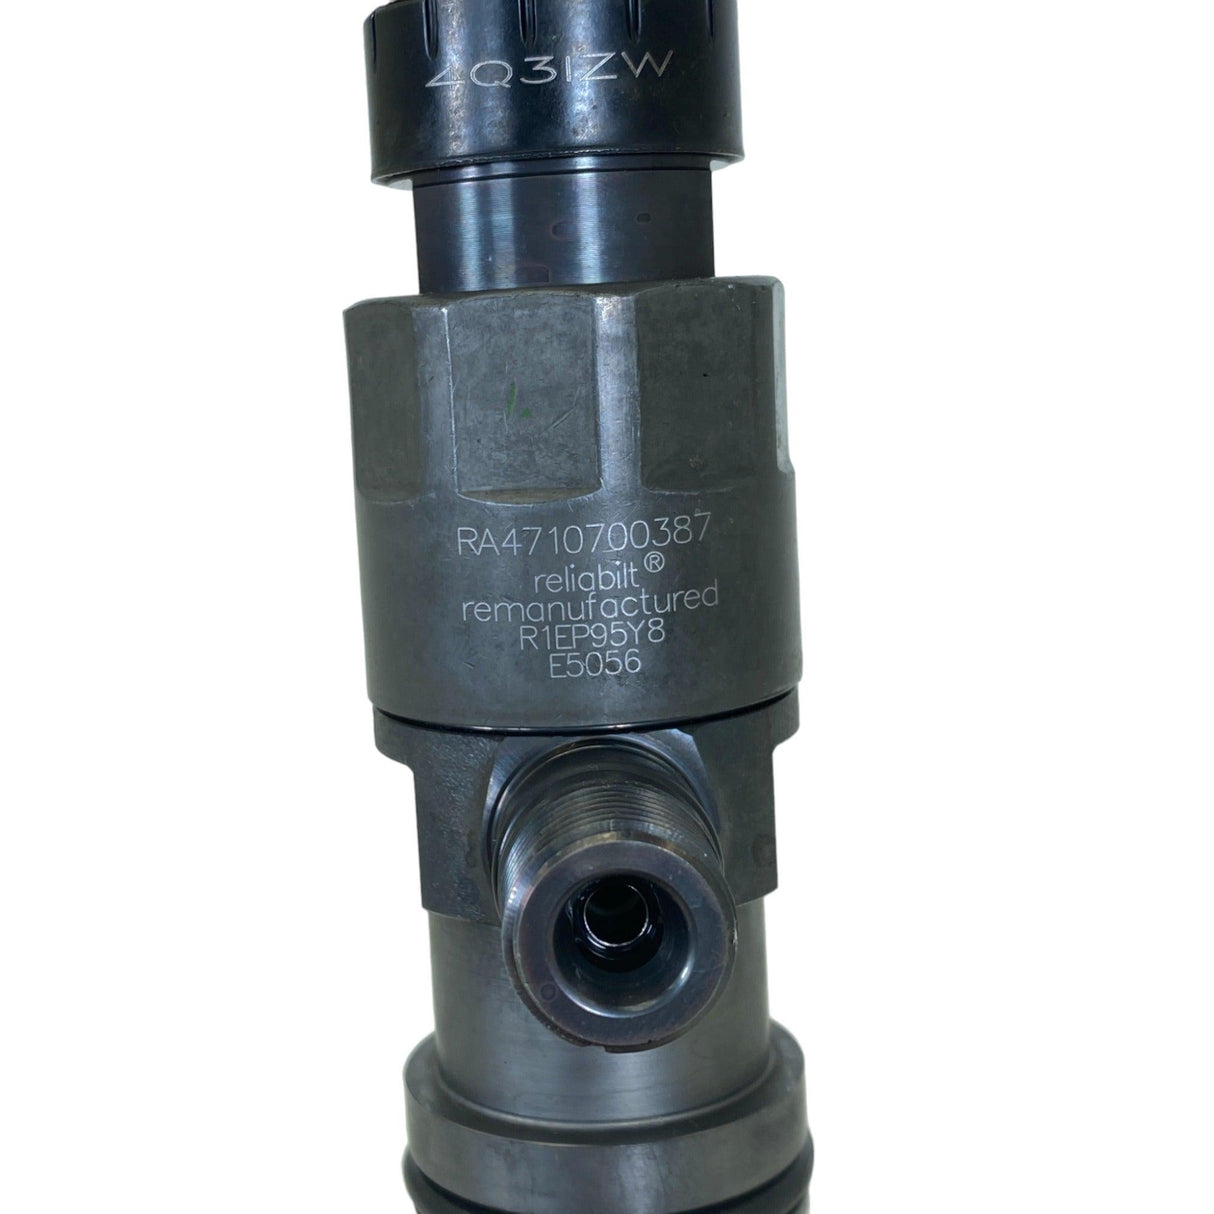 445120195 A4710700387 Genuine Bosch® Fuel Injector.